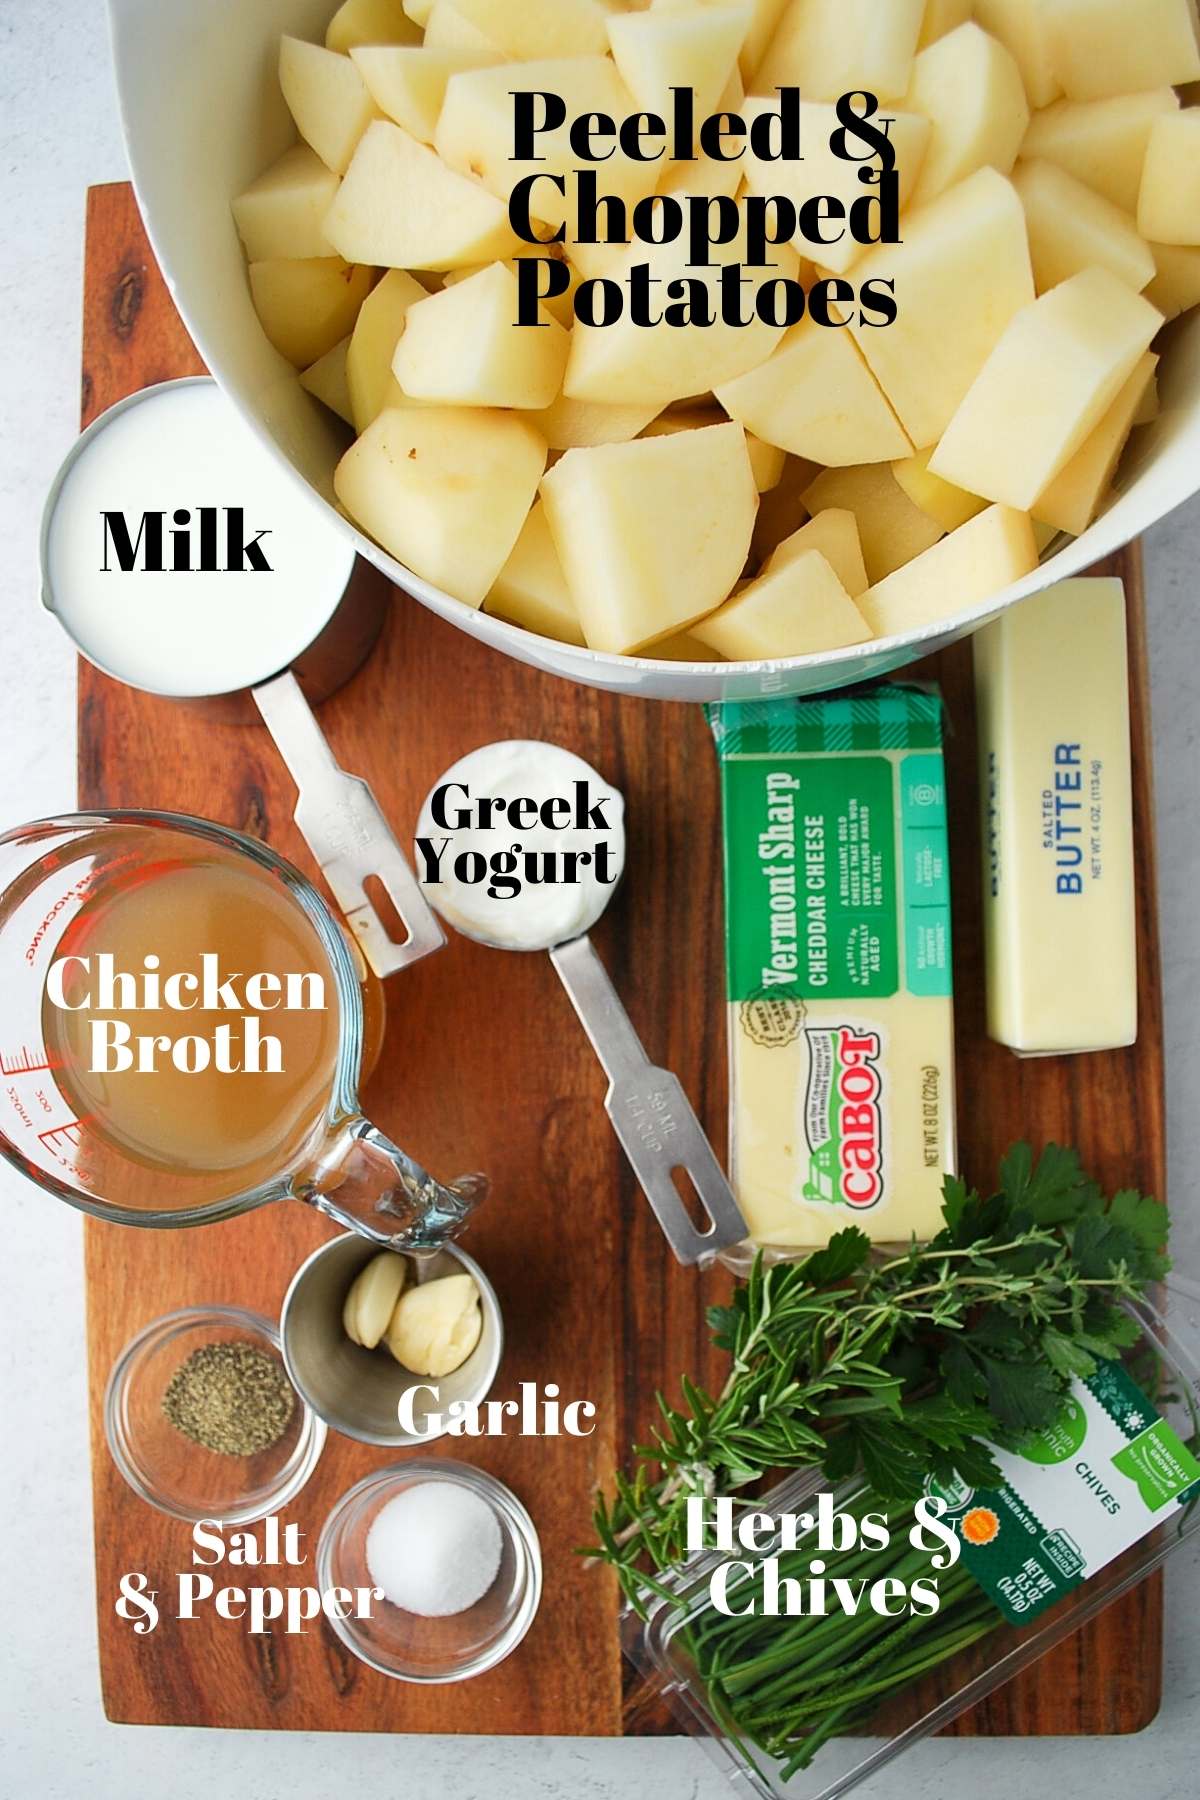 ingredients for loaded potatoes: potatoes, milk, Greek yogurt, chicken broth, garlic, cheese, butter, herbs, and salt and pepper